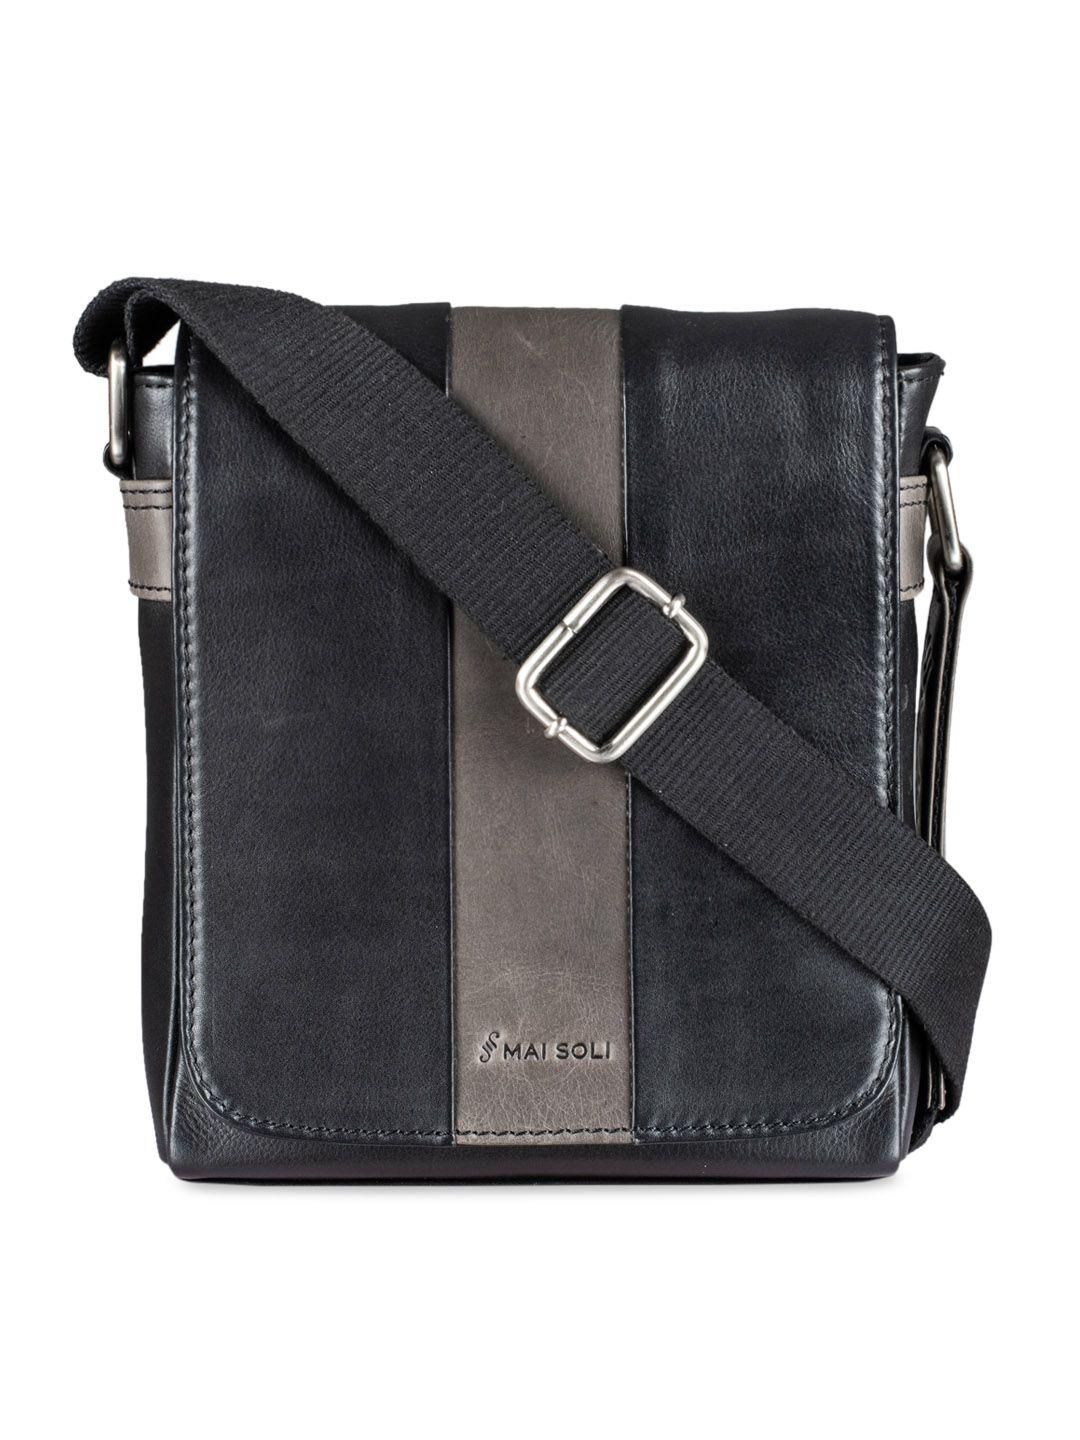 mai soli men black & grey colourblocked leather messenger bag